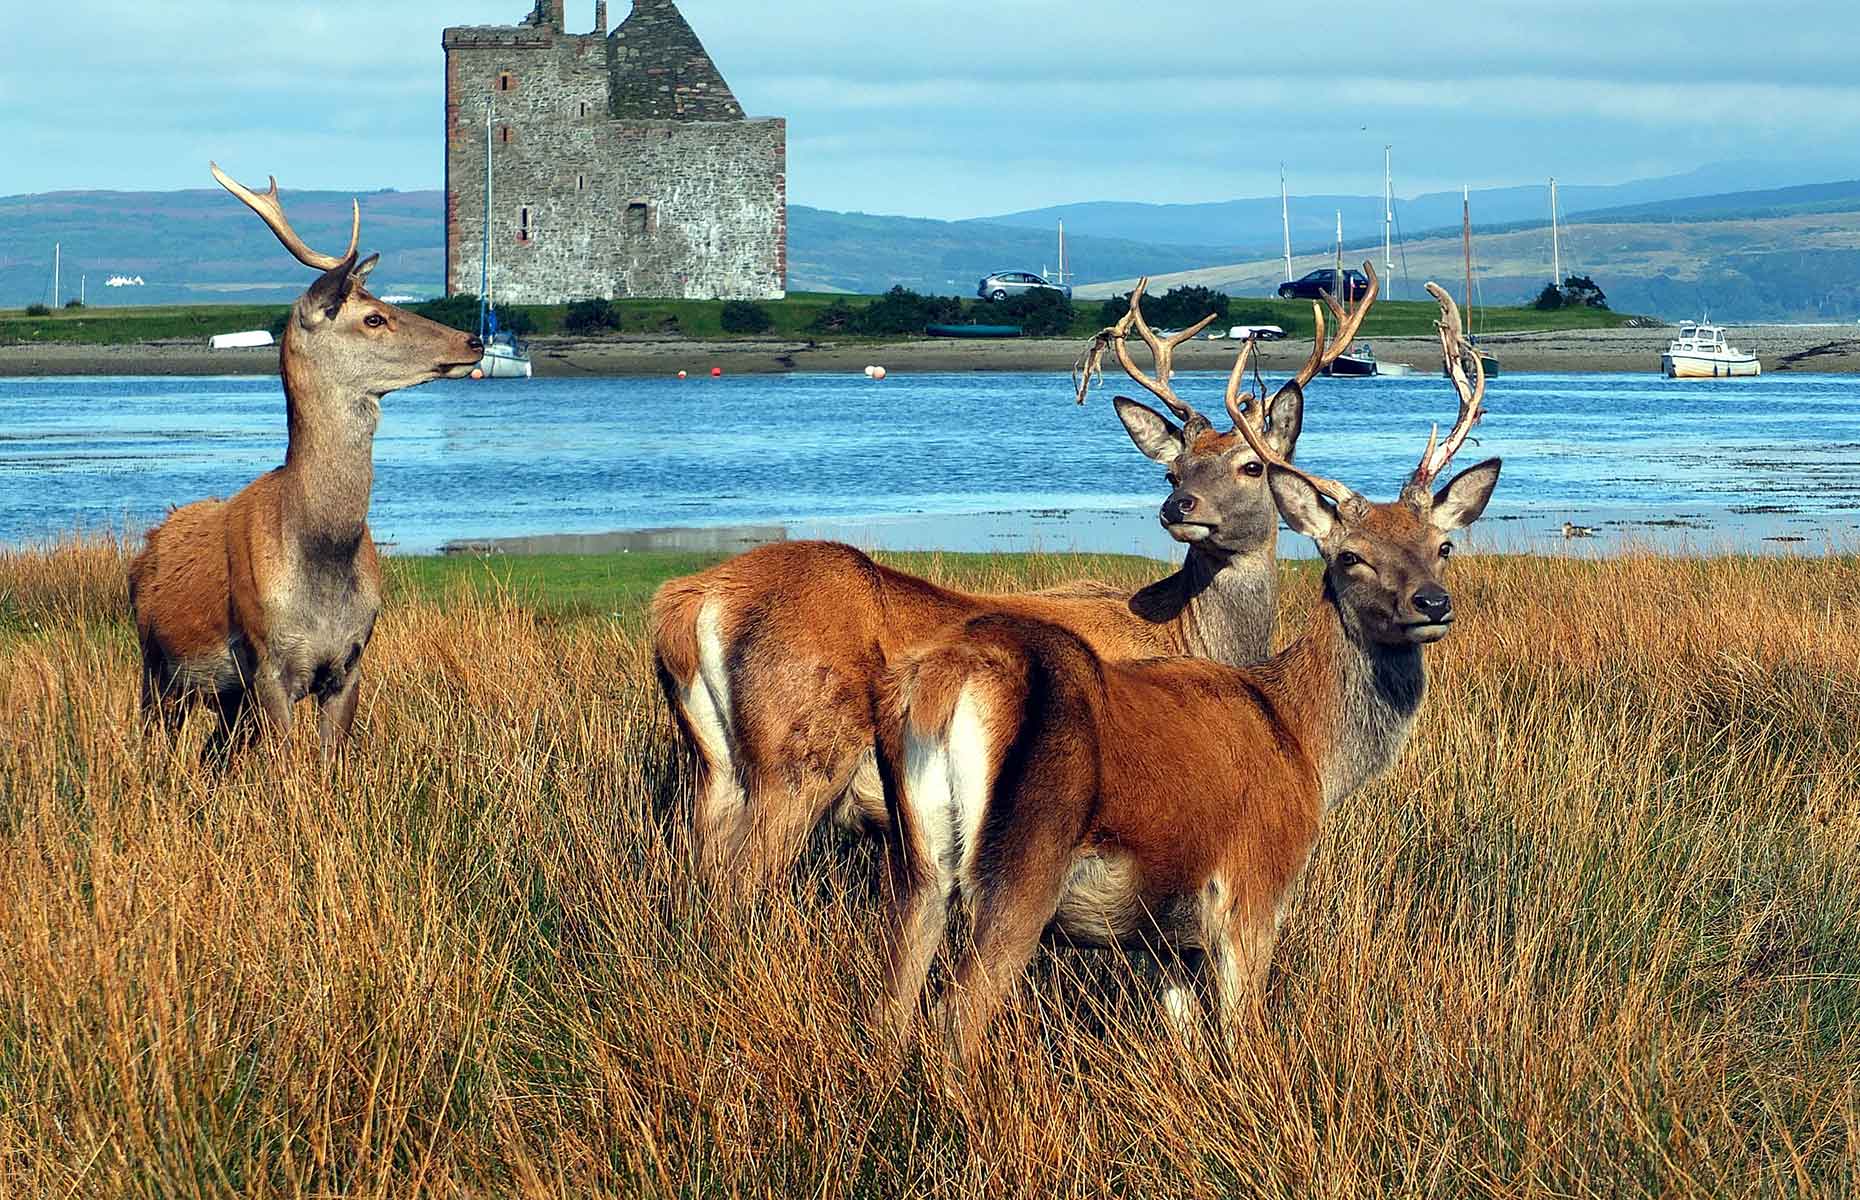 Deer on the Isle of Arran, Scotland (Image: Allan Napier/Shutterstock)